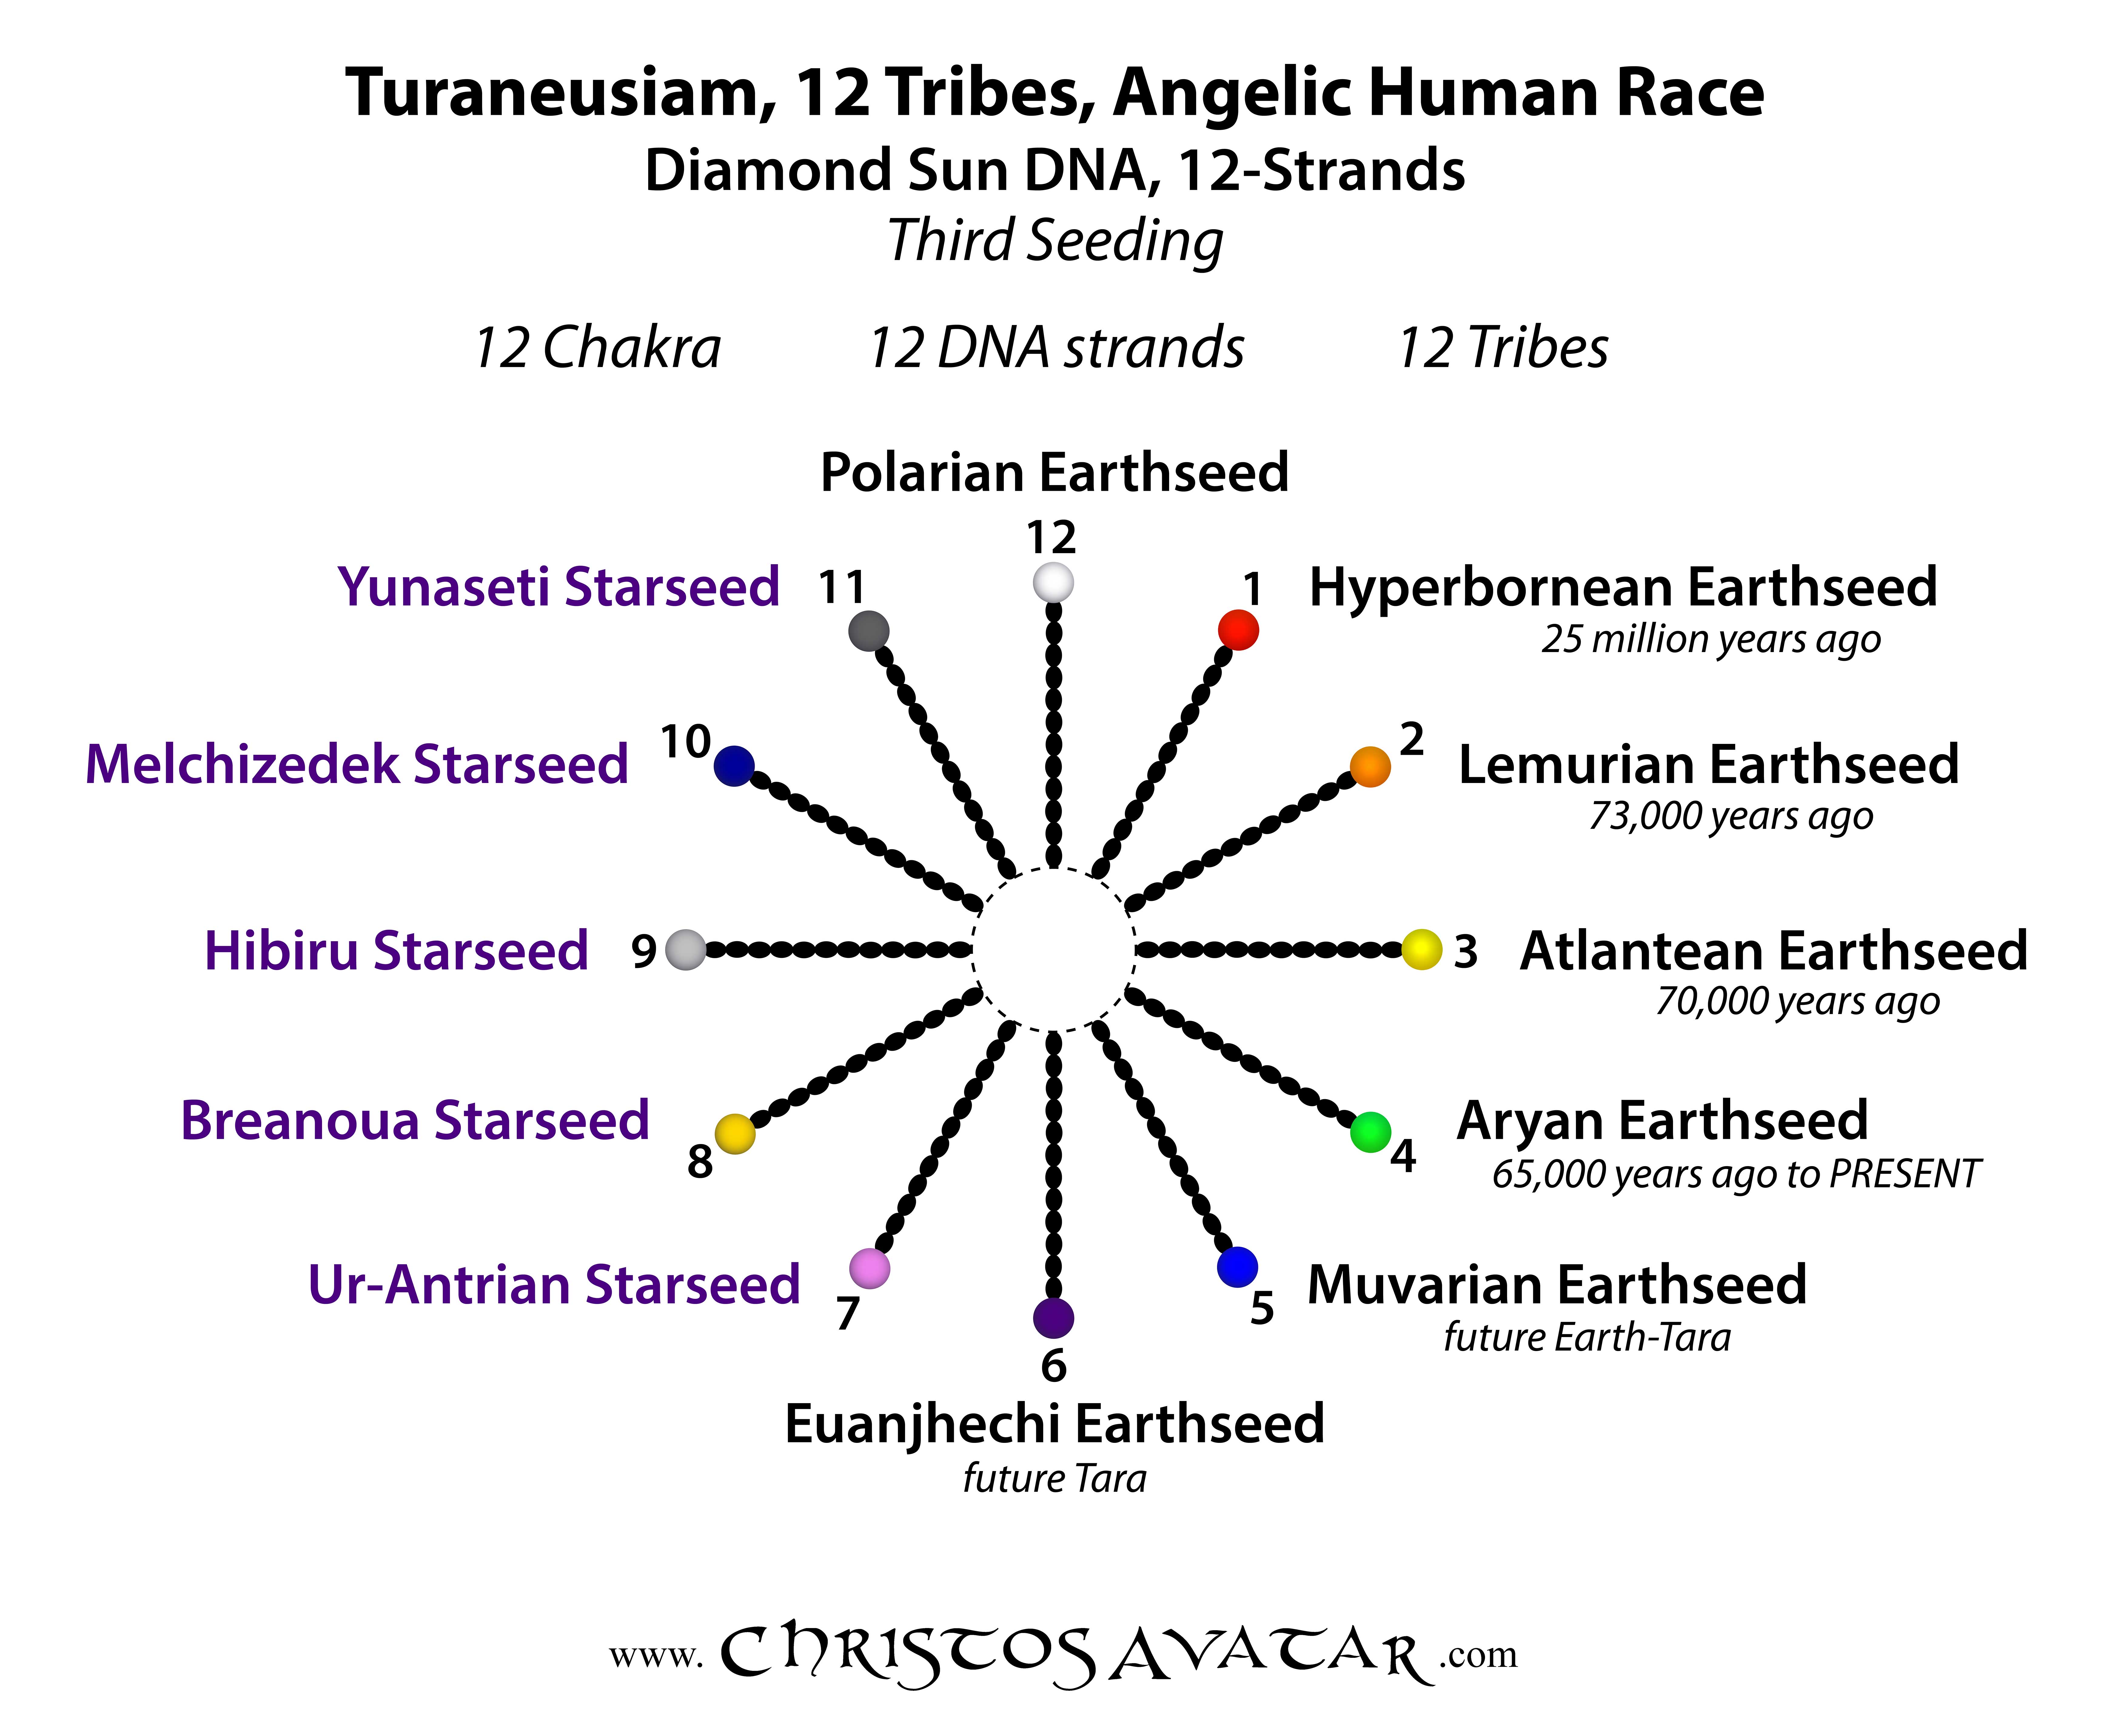 Time Matrix, Turaneusiam, 12 Tribes